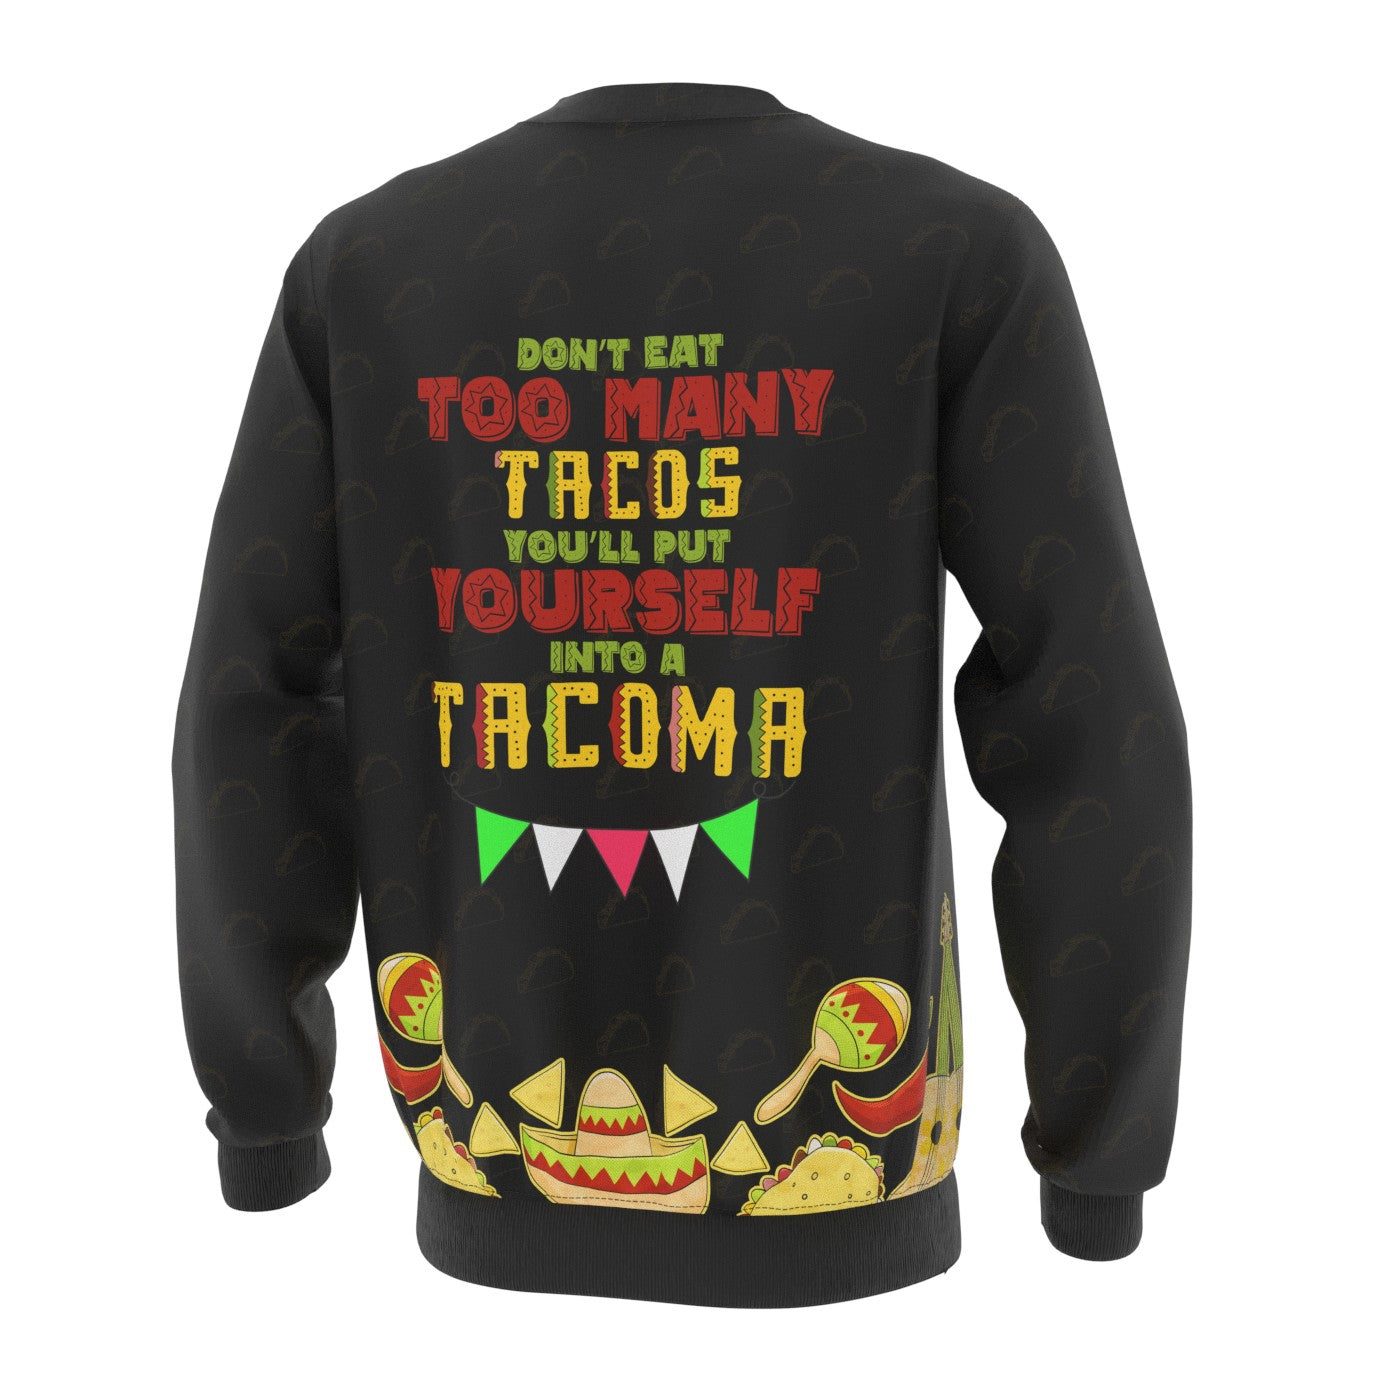 Tacoma Sweatshirt